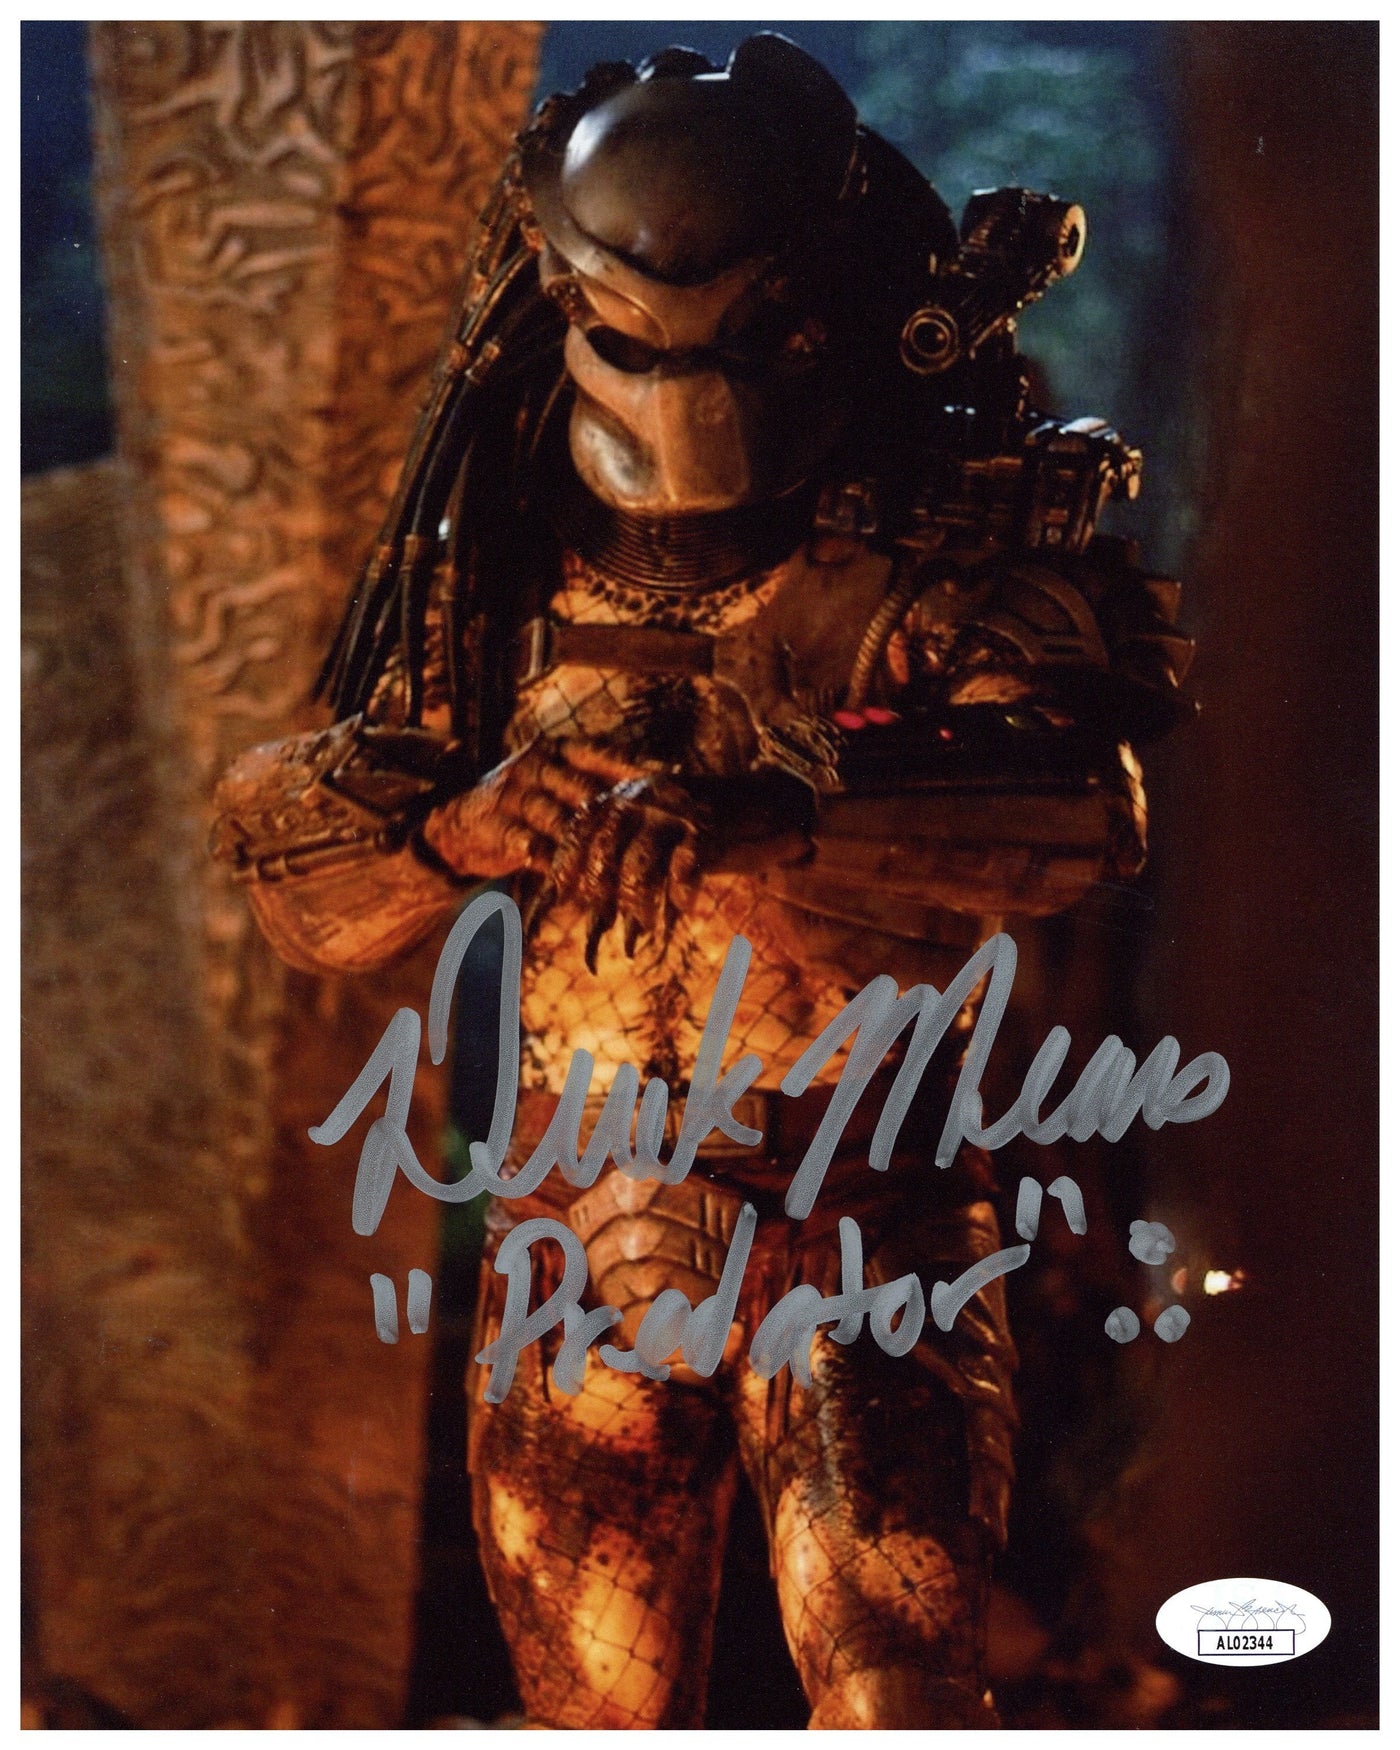 Derek Mears Signed 8x10 Photo Predator Autographed JSA COA